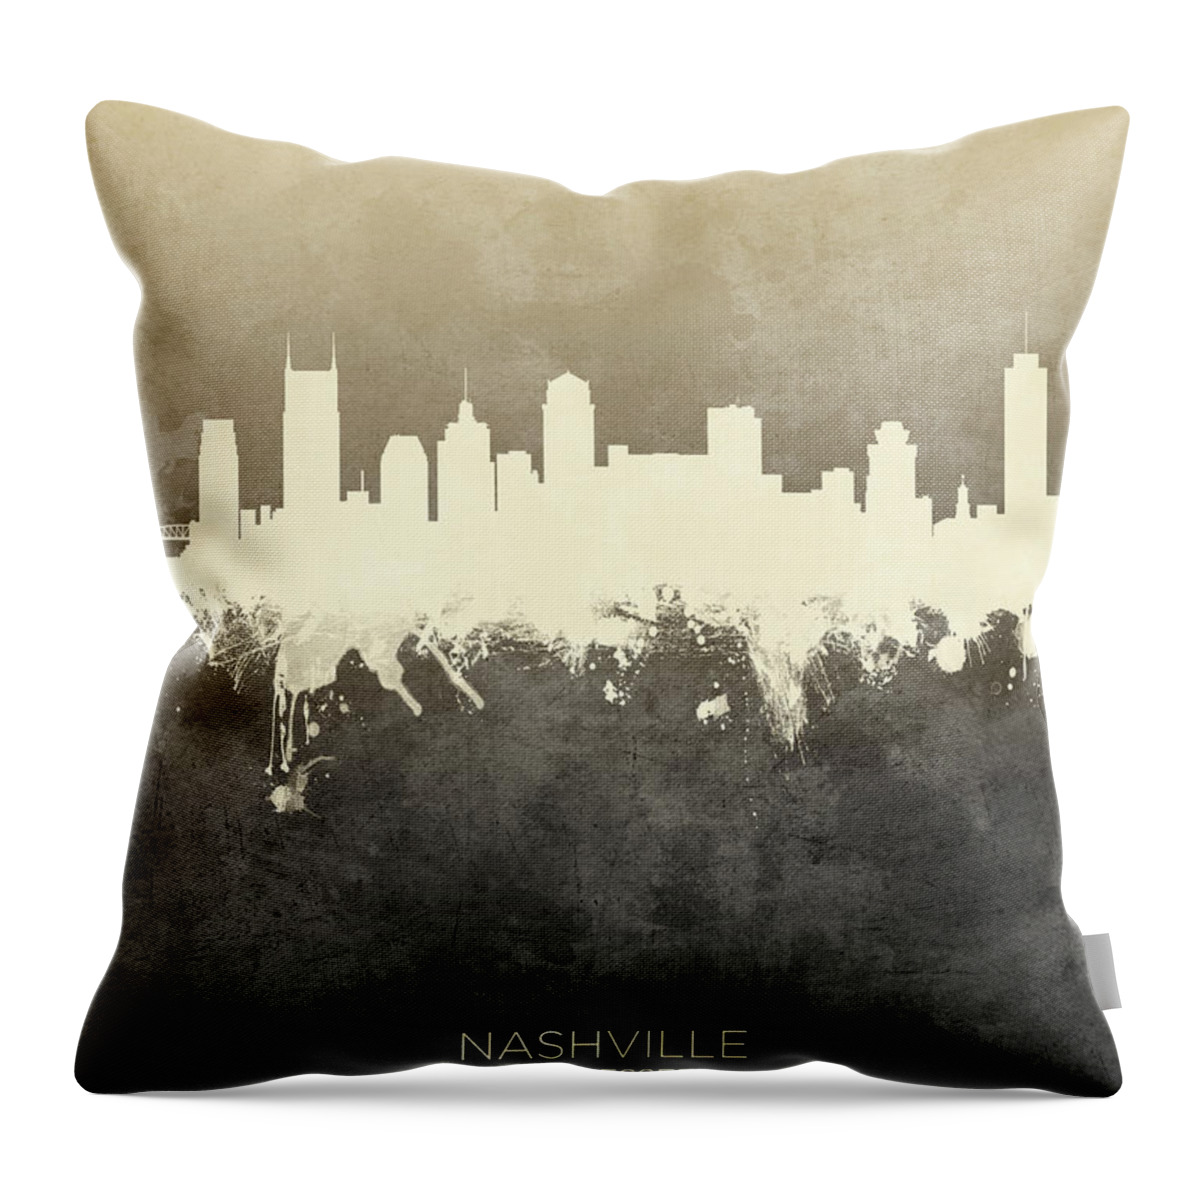 Nashville Throw Pillow featuring the digital art Nashville Tennessee Skyline by Michael Tompsett